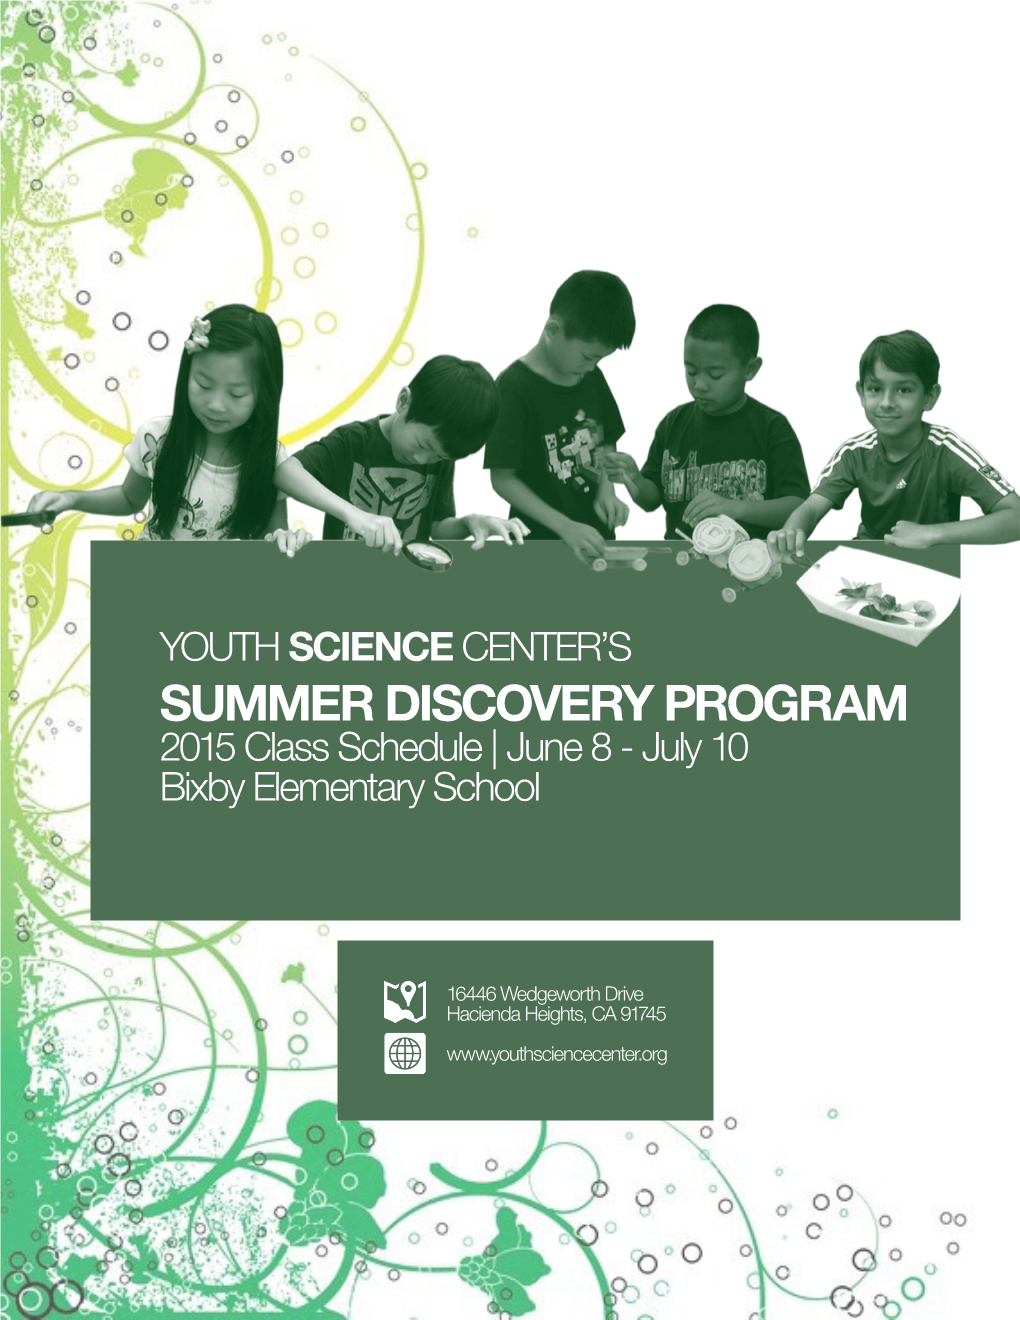 SUMMER DISCOVERY PROGRAM 2015 Class Schedule | June 8 - July 10 Bixby Elementary School